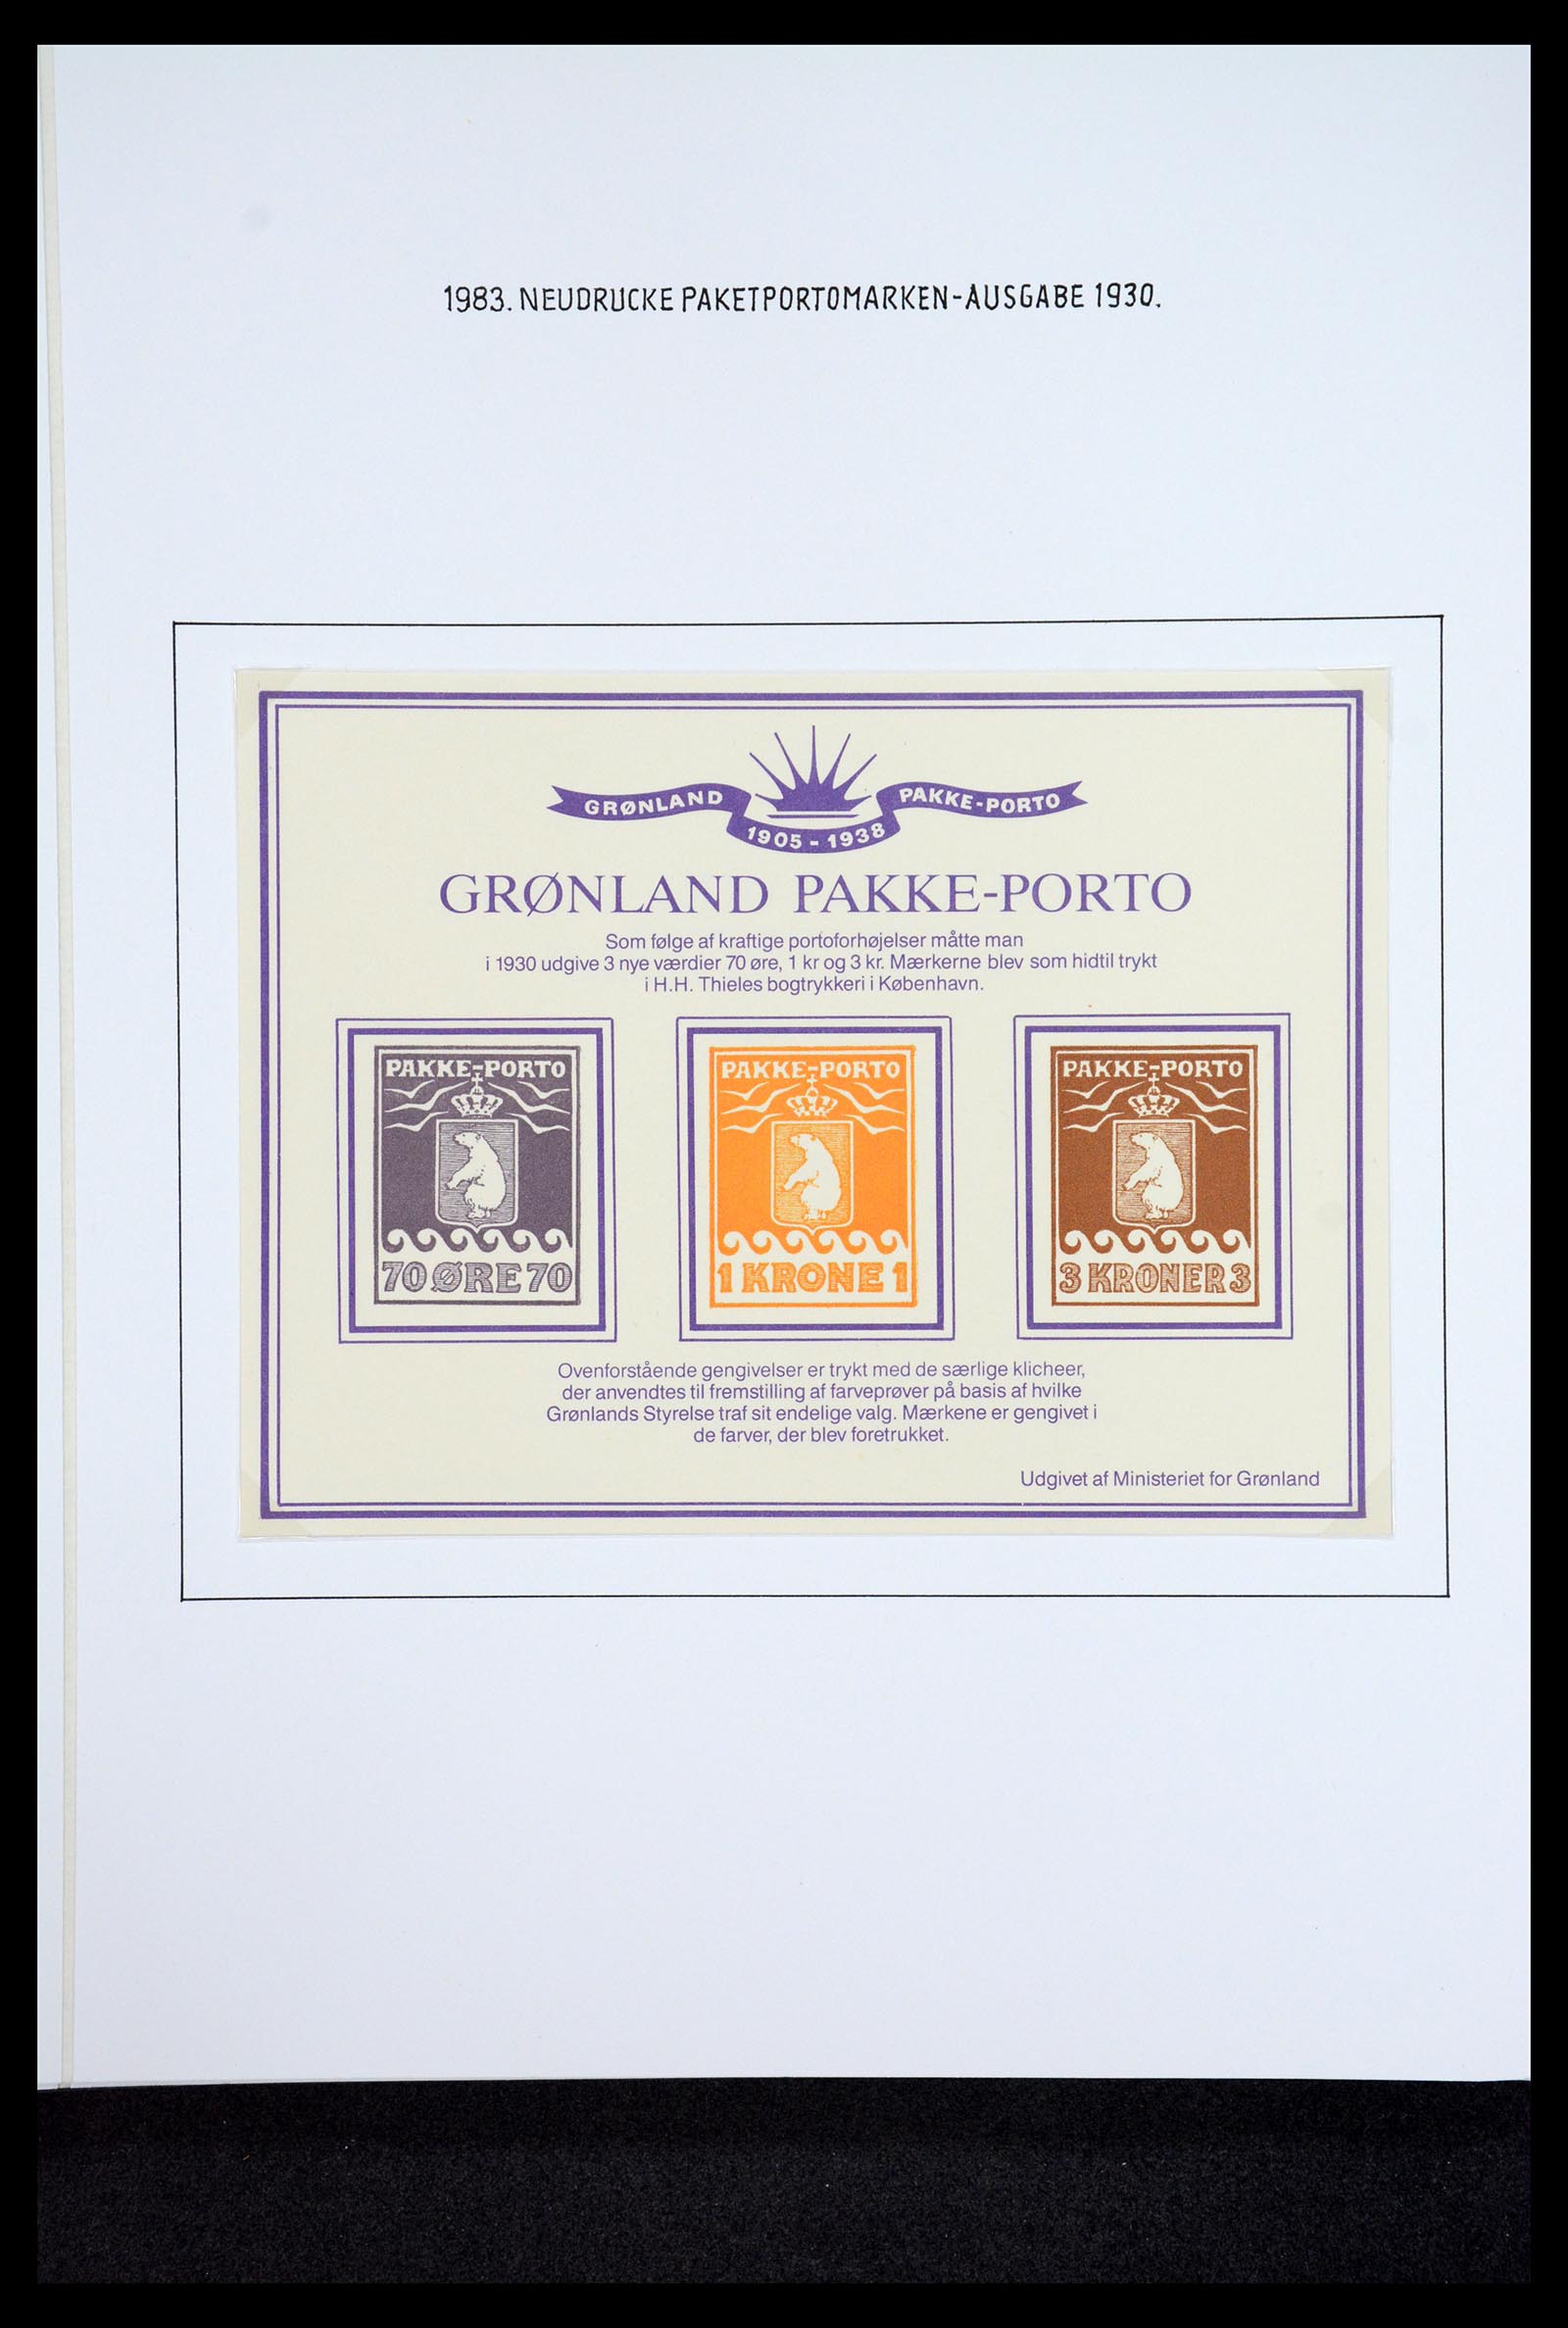 36748 016 - Stamp collection 36748 Greenland pakke-porto 1905-1930.